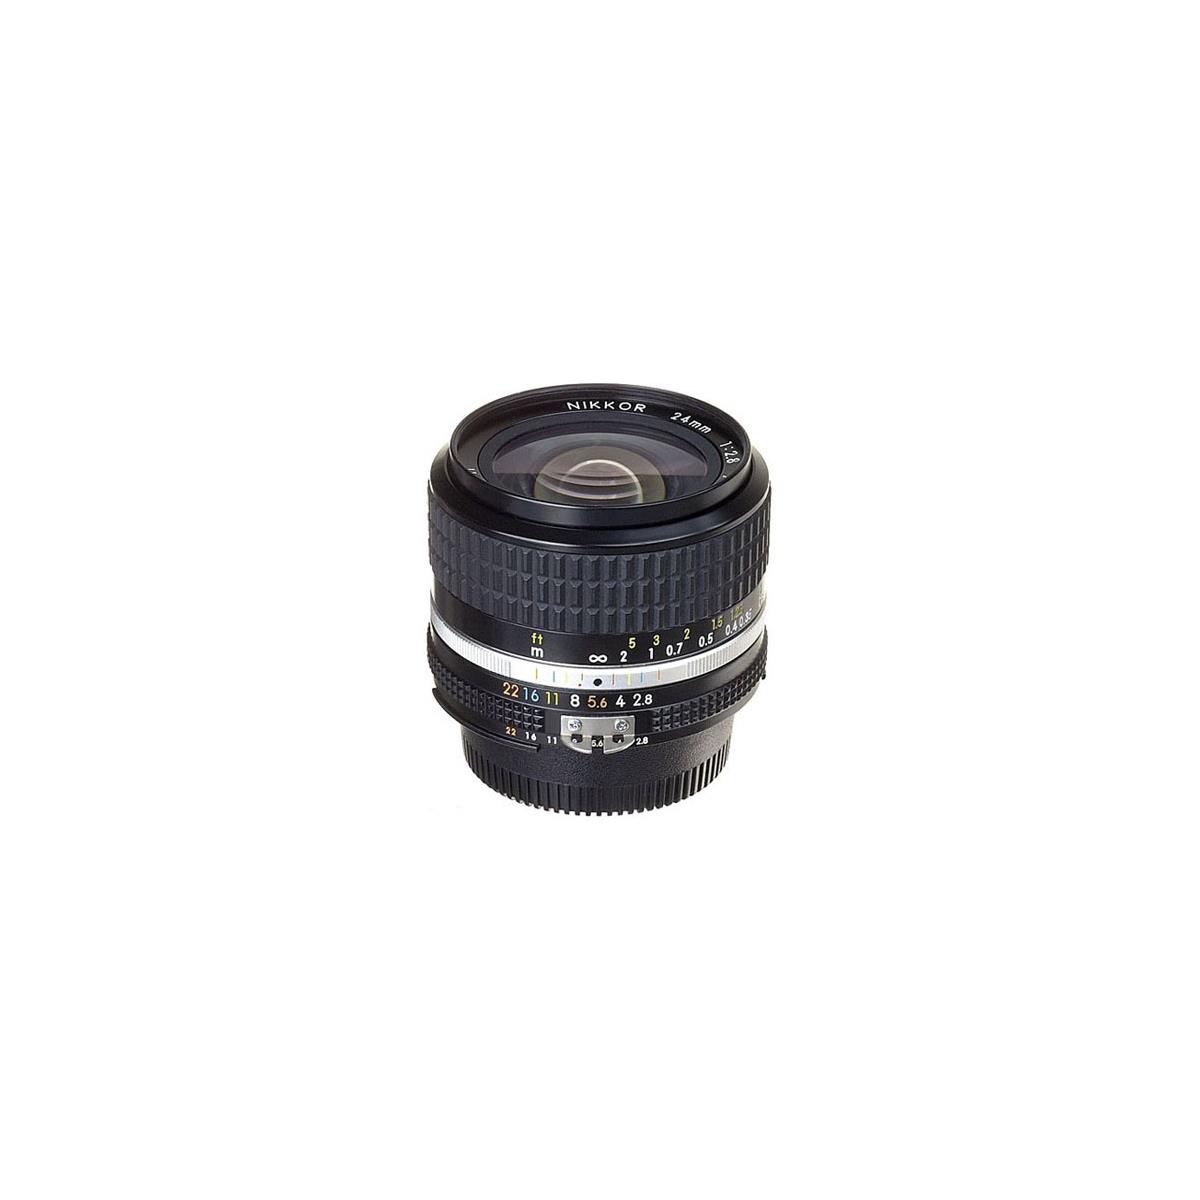 Image of Nikon 24mm f/2.8 AIS Wide Angle Manual Focus Lens - Gray Market